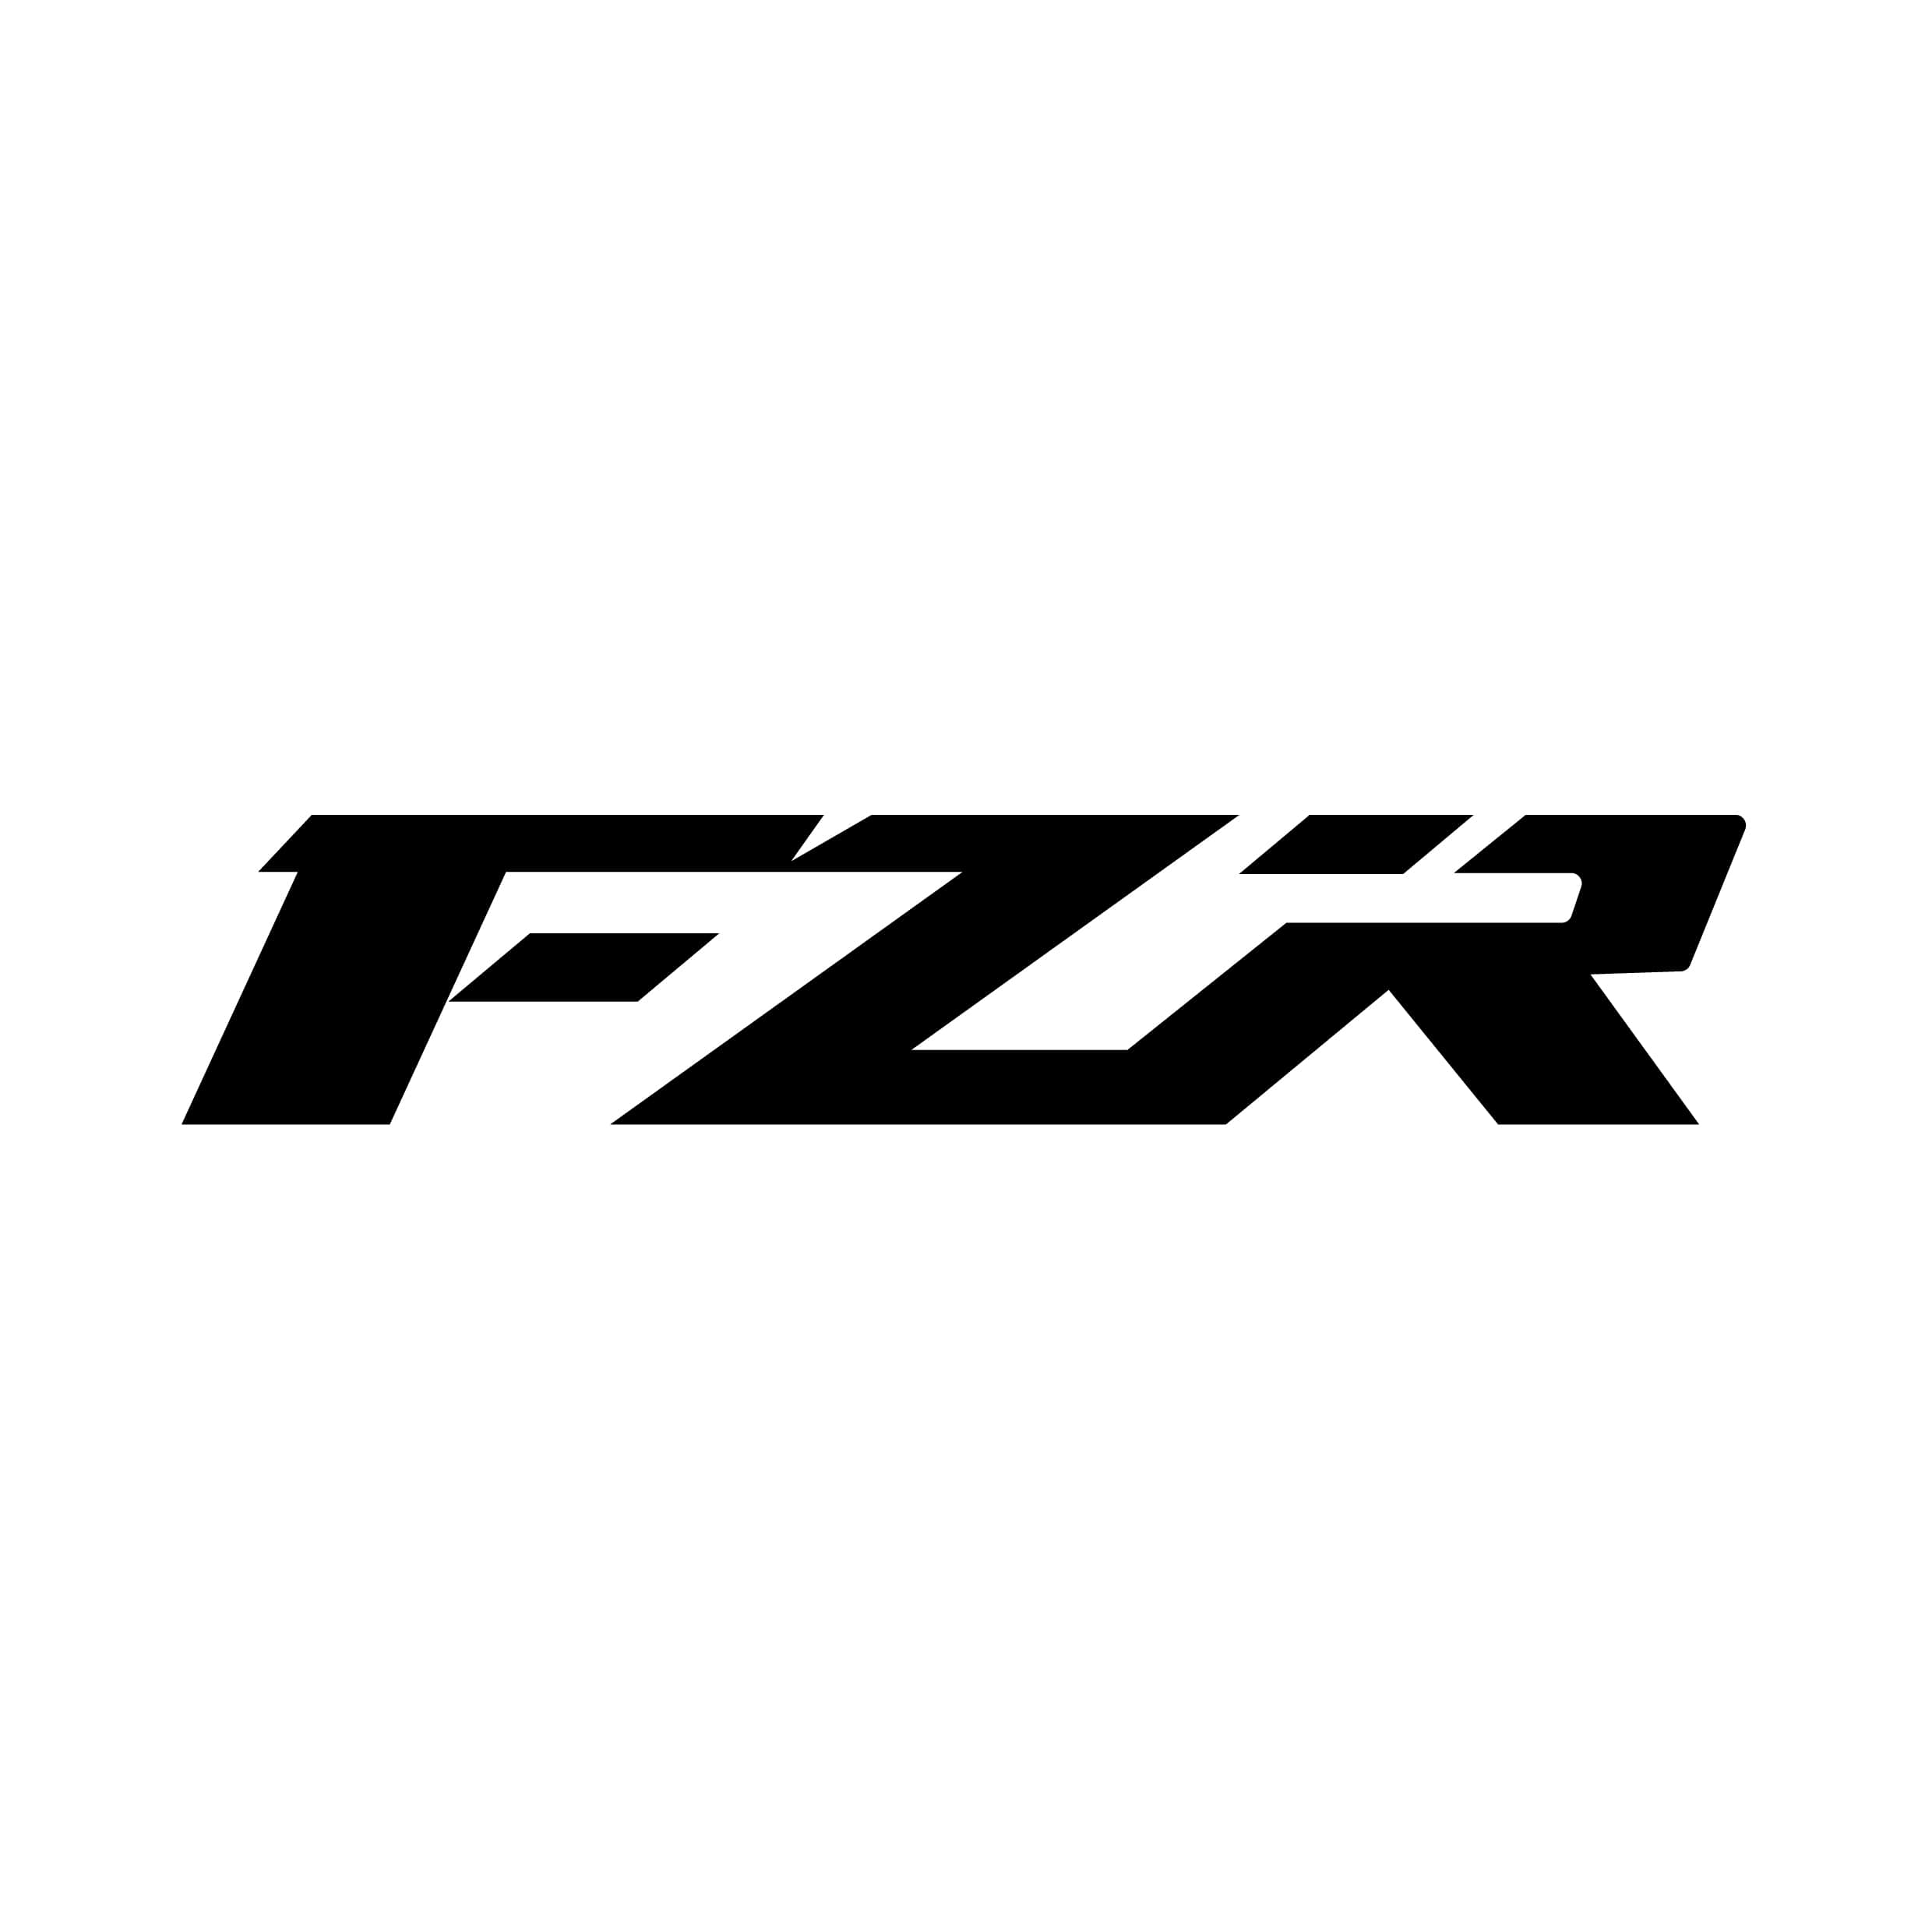 stickers-fzr-yamaha-ref77-autocollant-moto-sticker-deux-roue-autocollants-decals-sponsors-tuning-sport-logo-bike-scooter-min